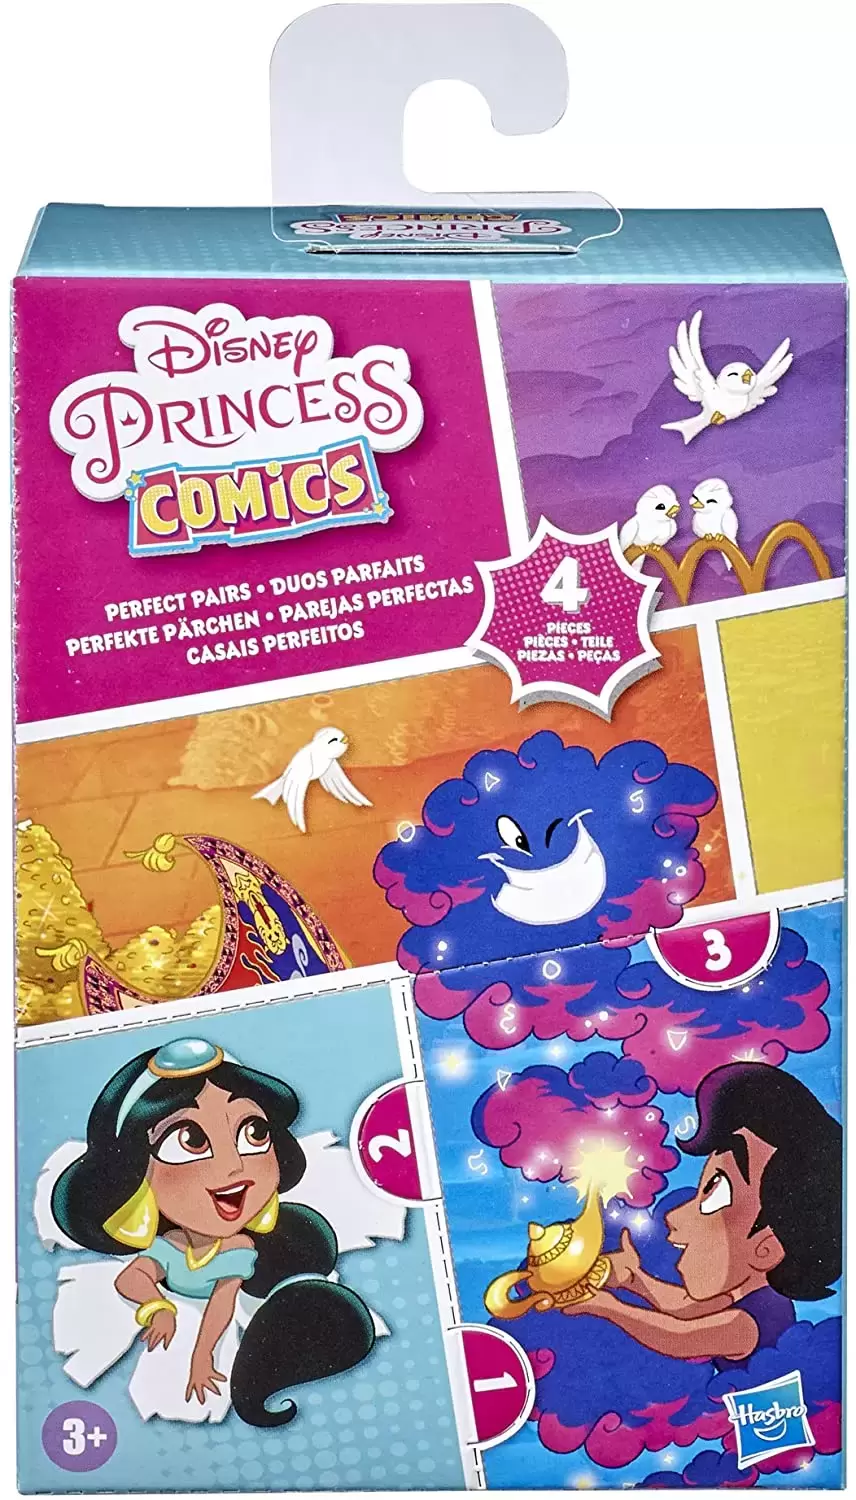 Disney Princess Poseable Comic Collection - Perfect Pairs Jasmine And Aladdin